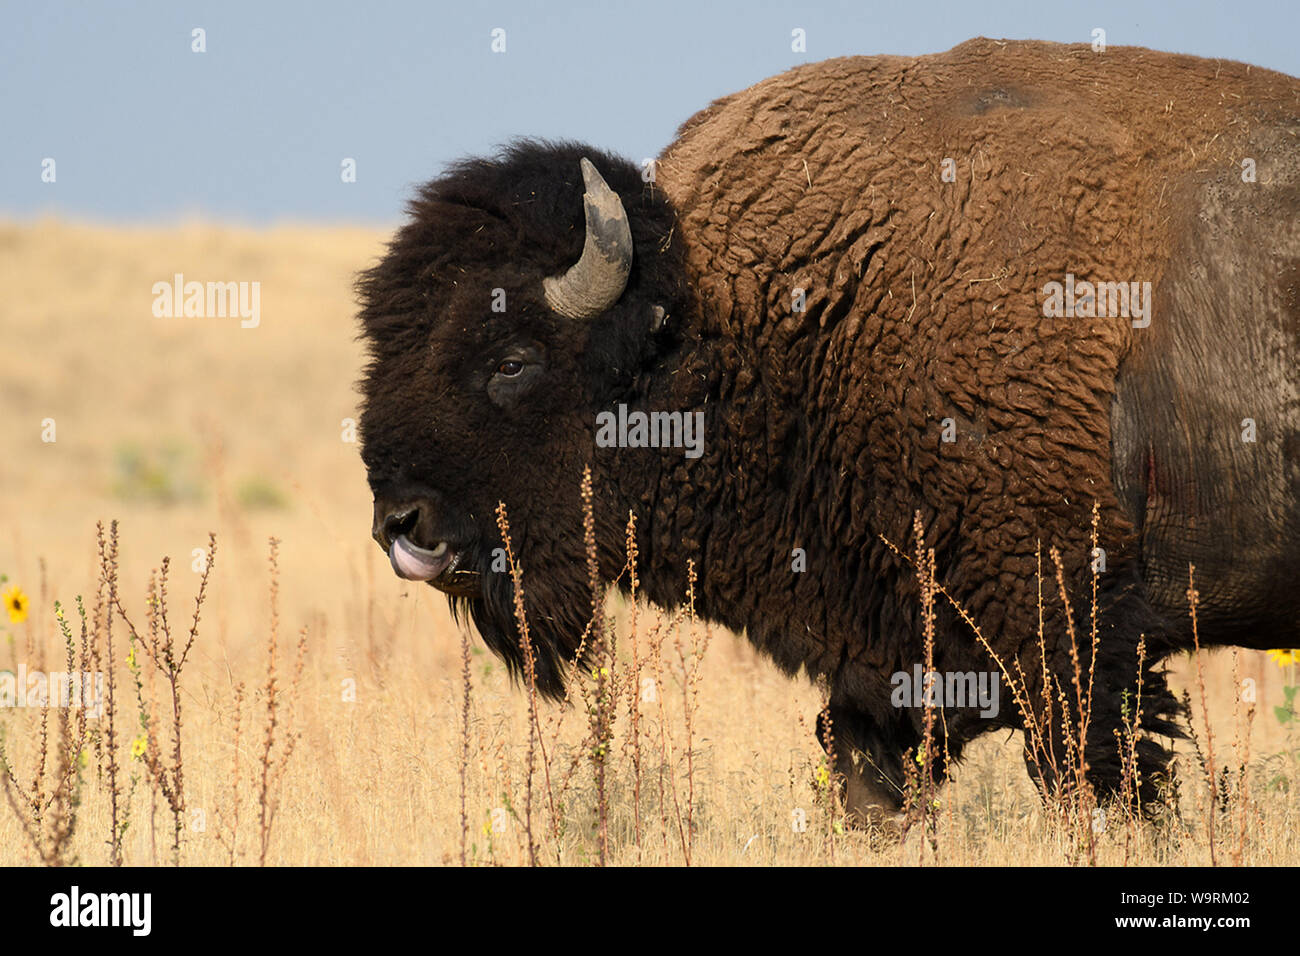 North America, American, USA, Great Basin, Utah, Antelope Island, State Park, Bison bull *** Local Caption *** Stock Photo